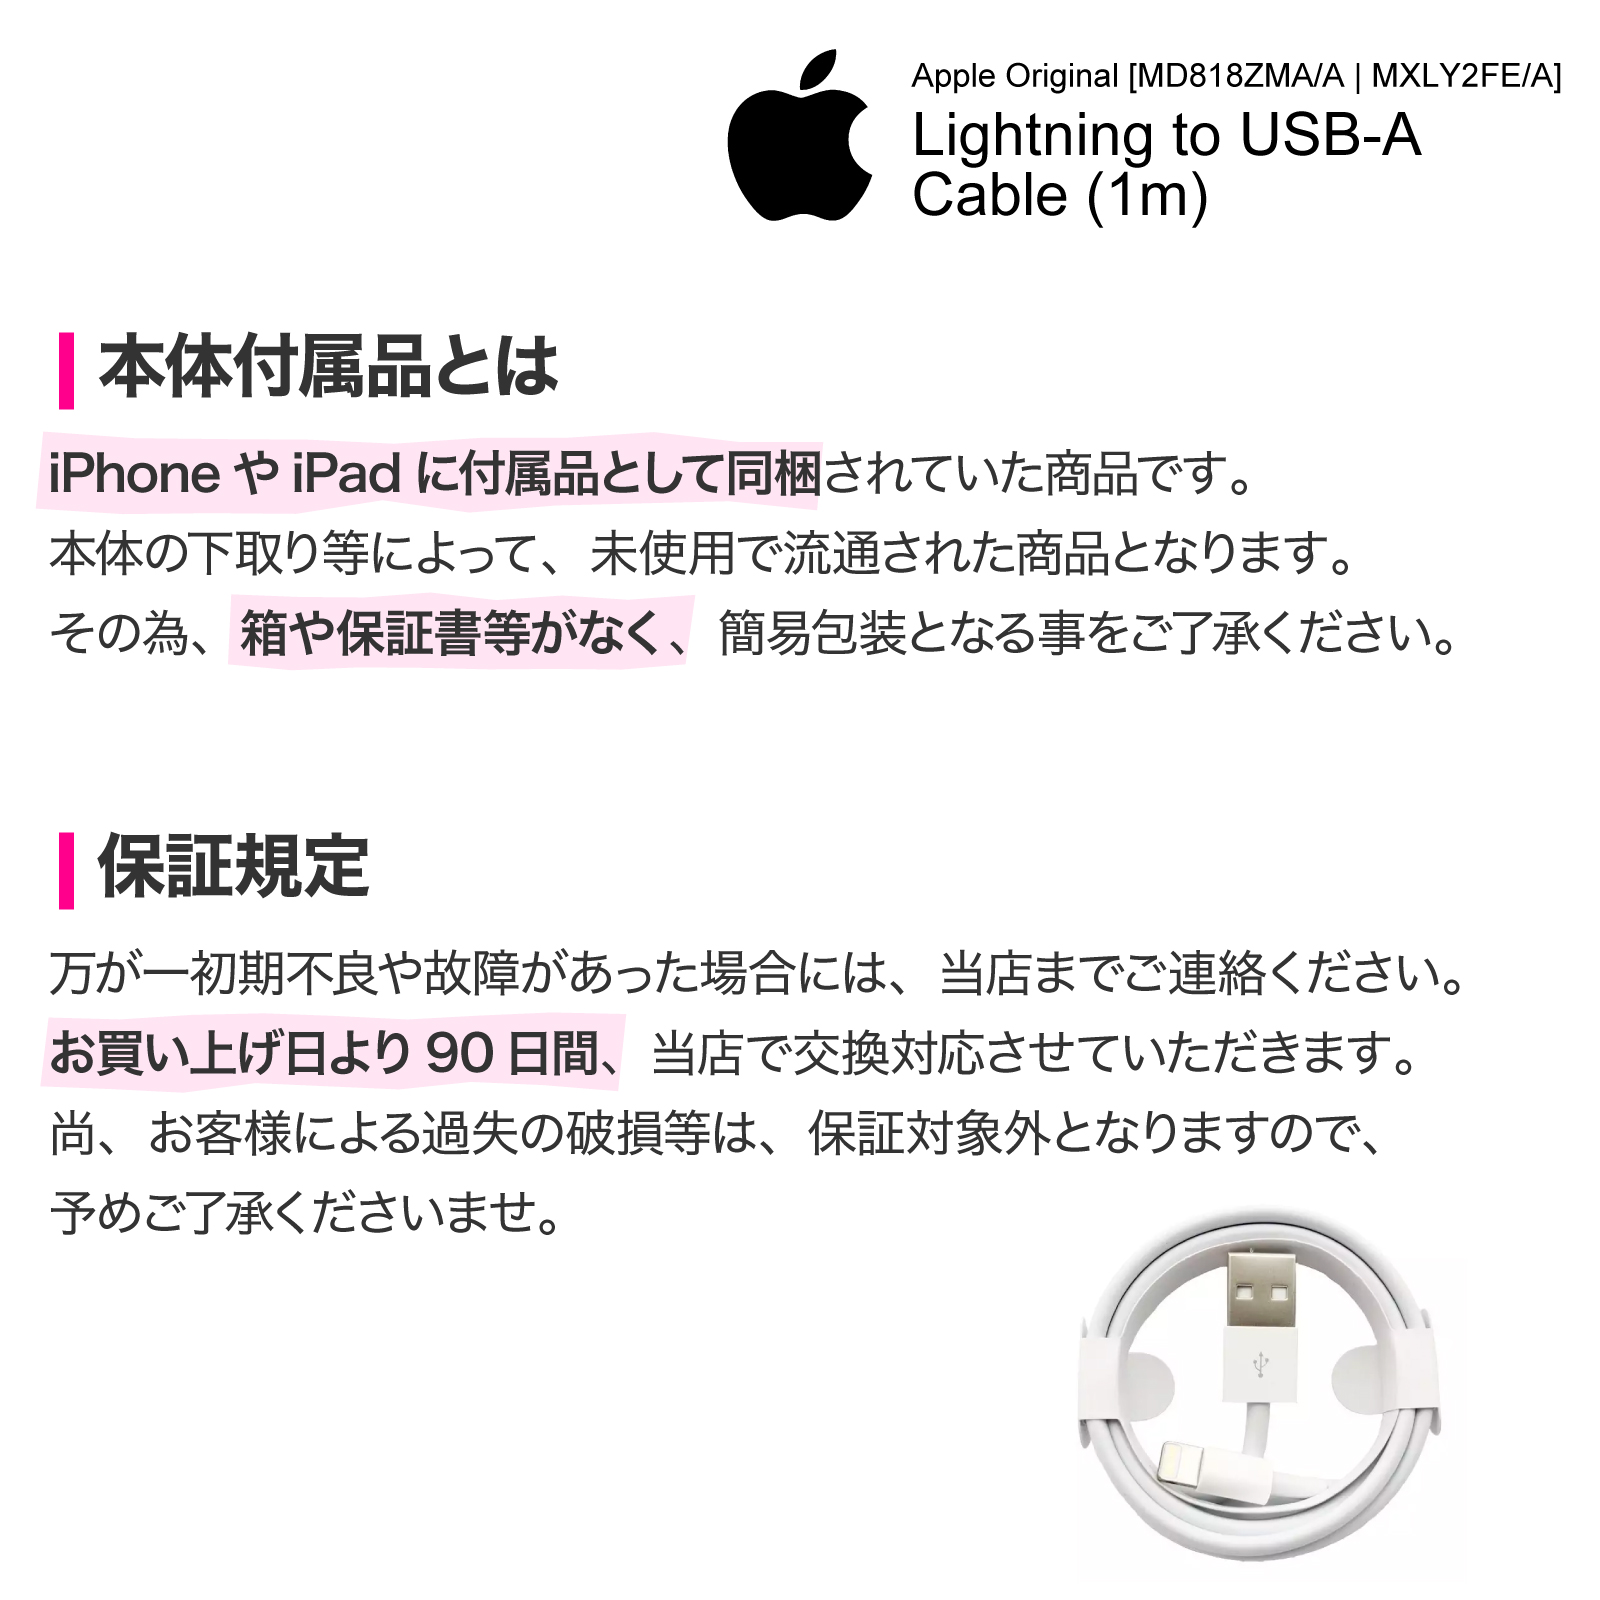 Apple純正LightningケーブルMD818ZM A